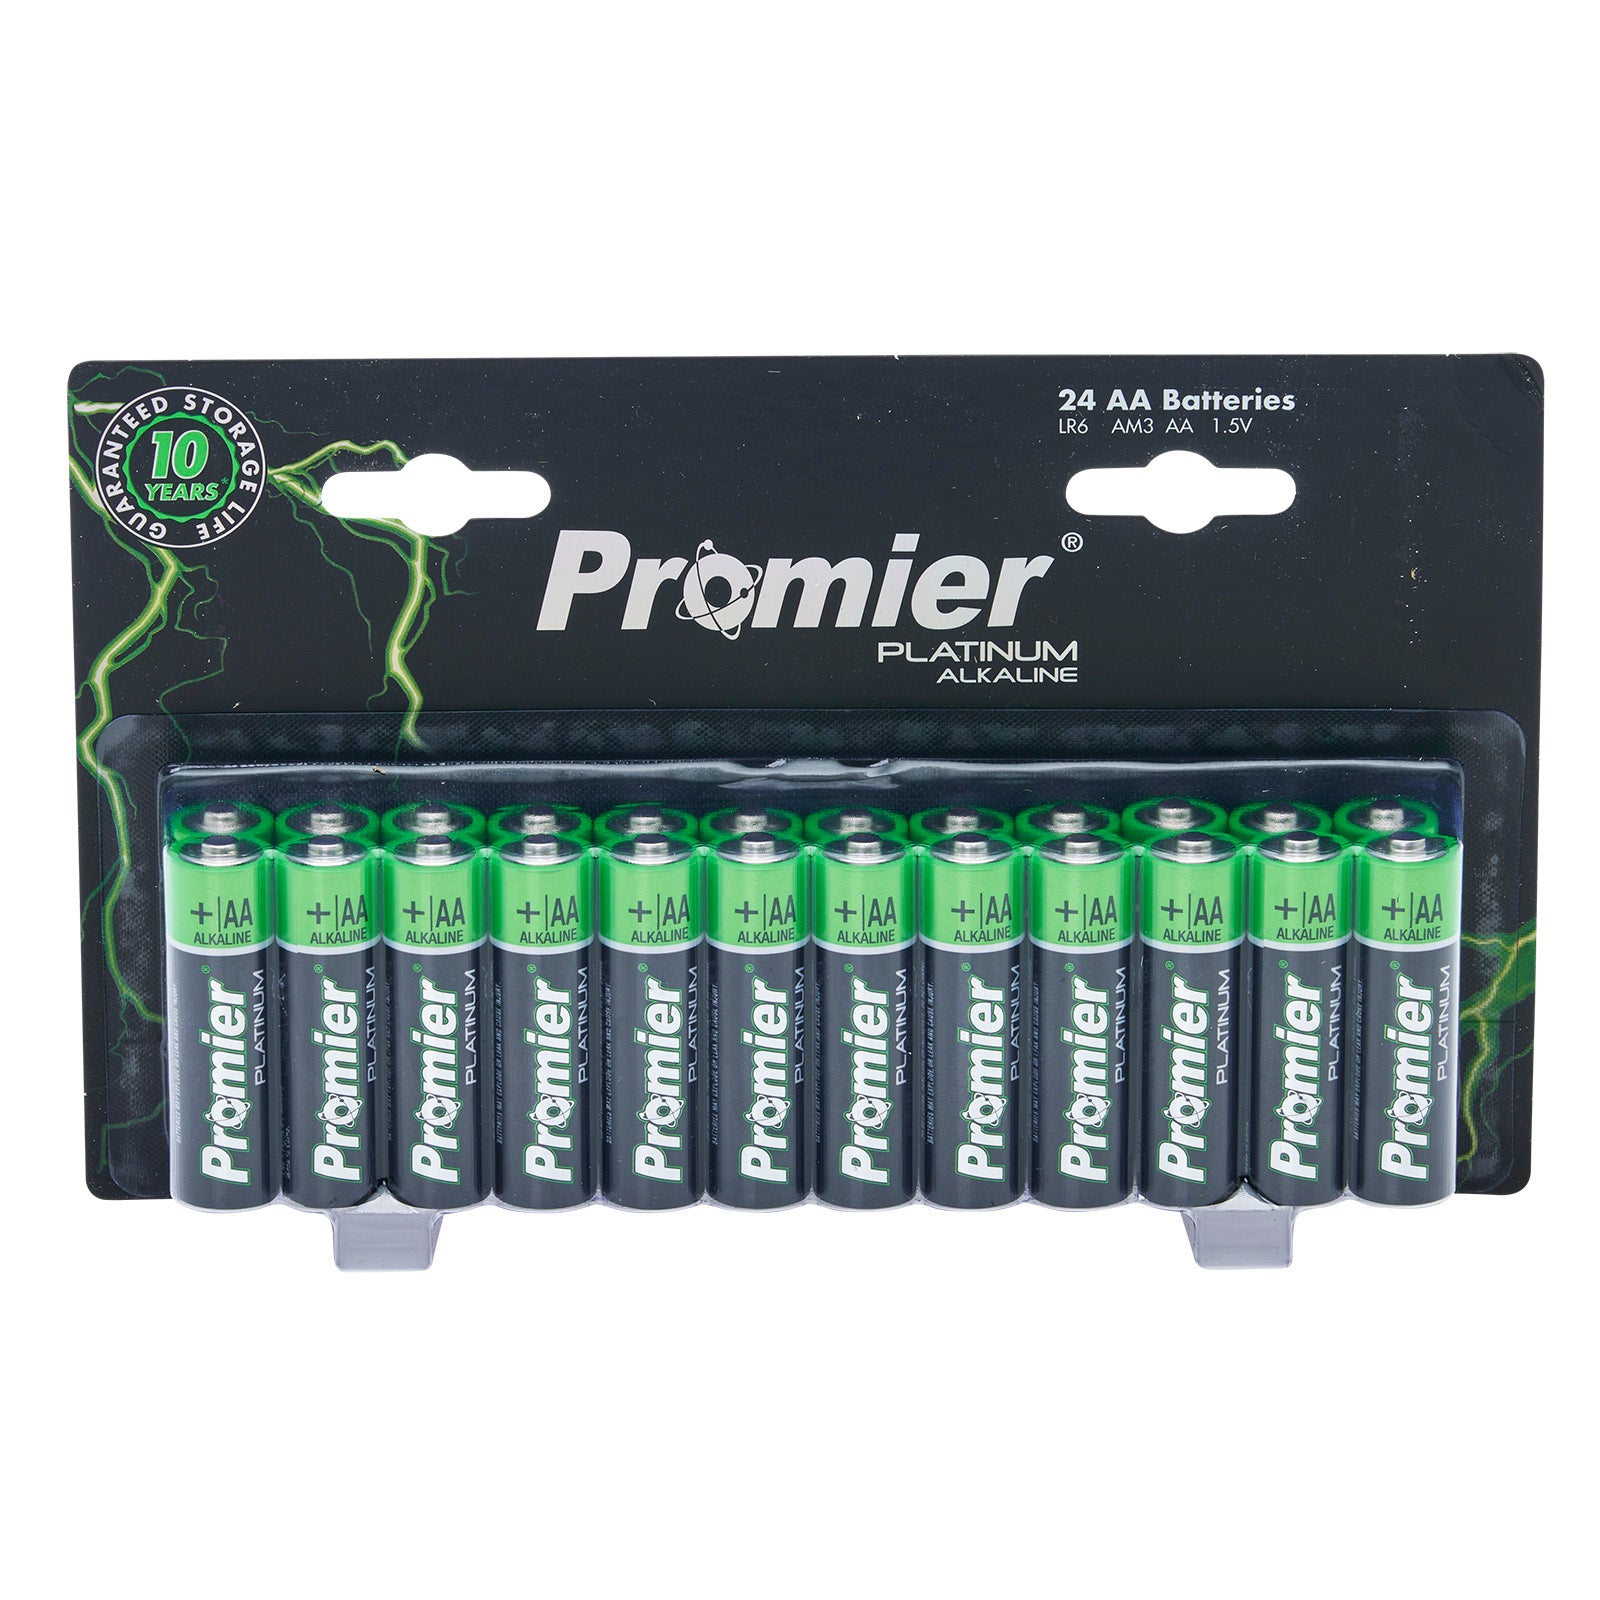 Promier® AA Platinum Alkaline Battery 24 Pack